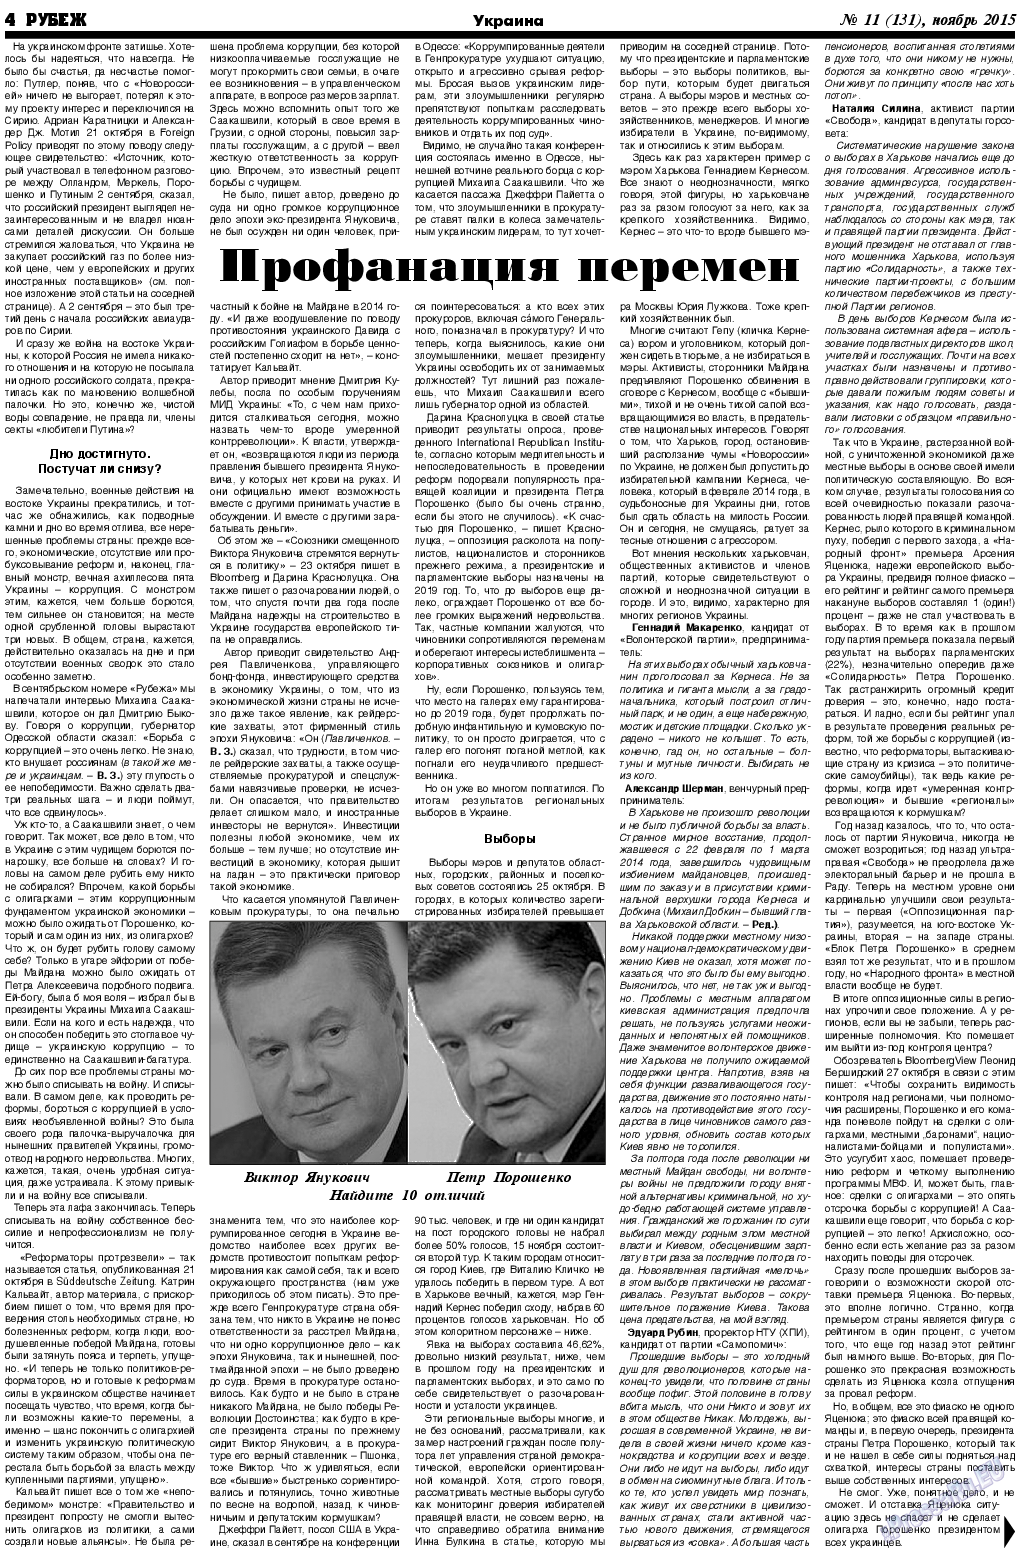 Рубеж, газета. 2015 №11 стр.4